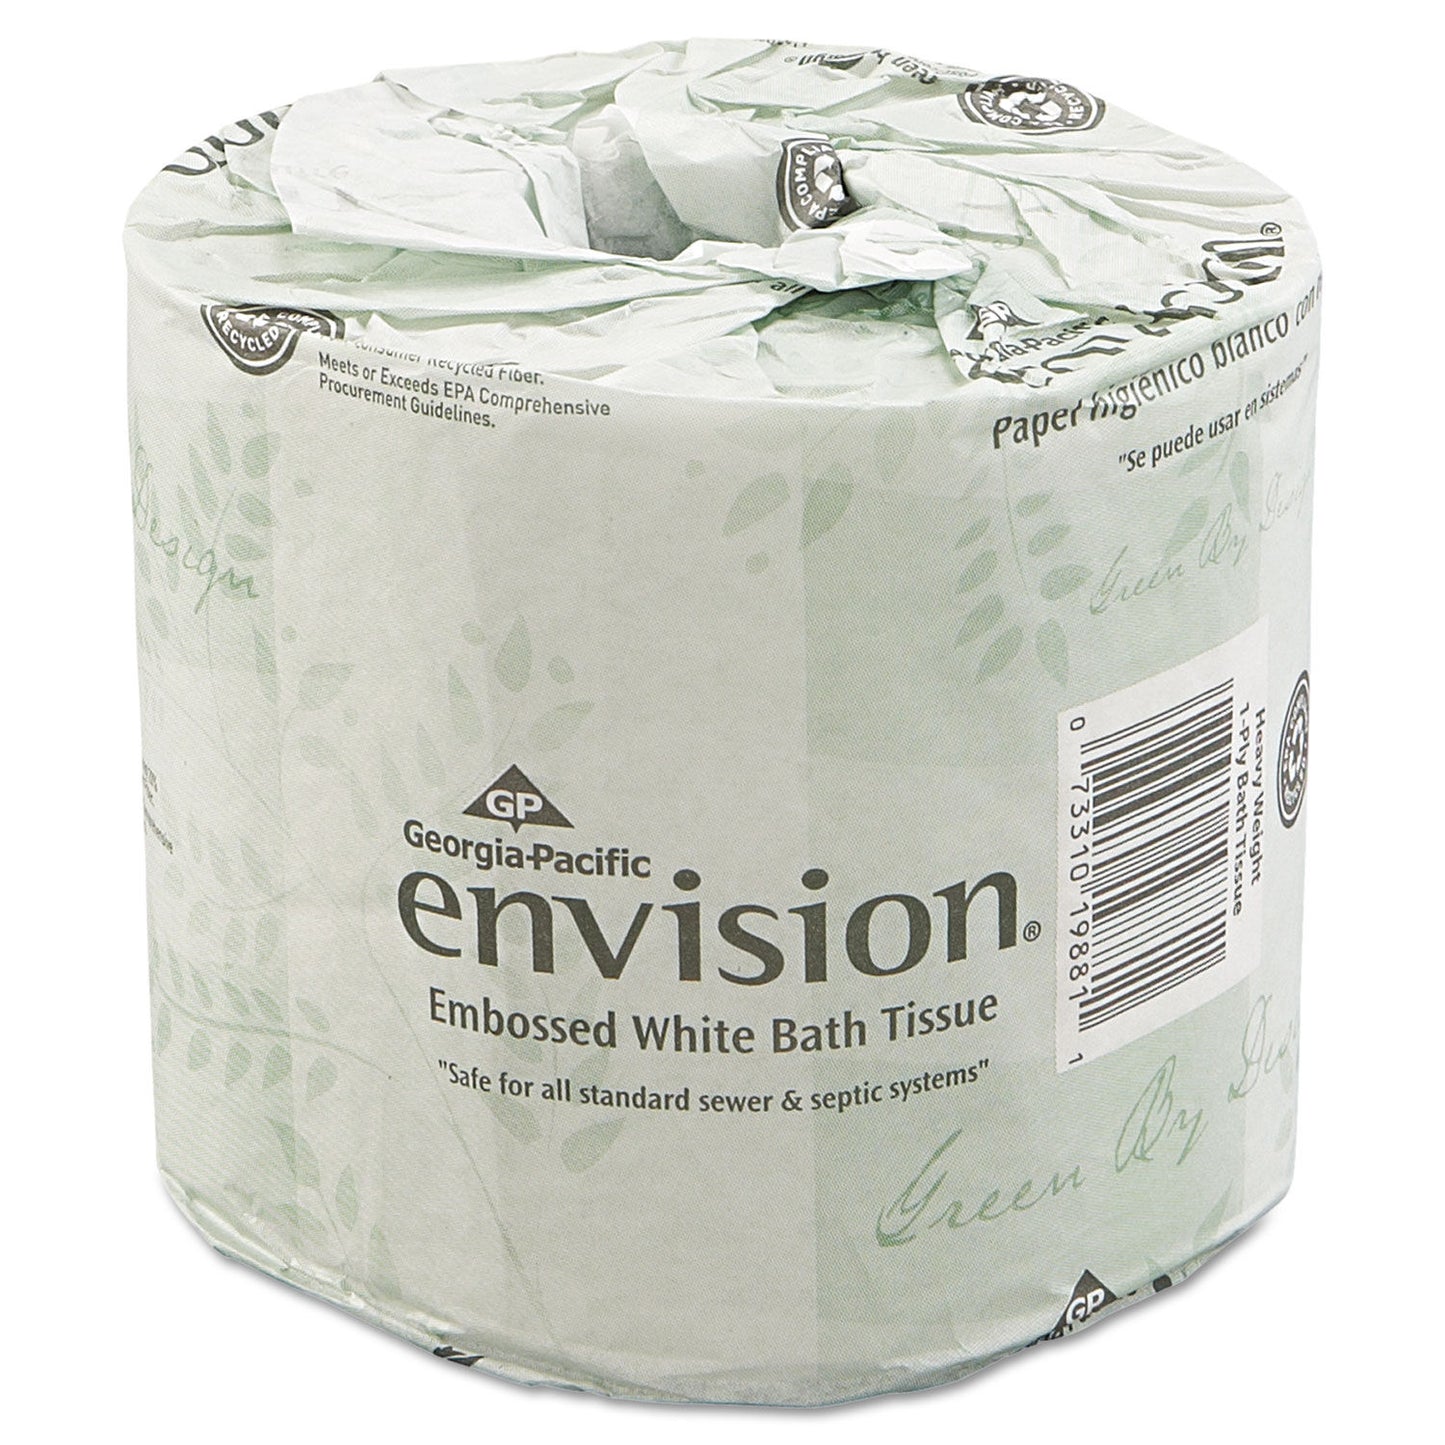 Georgia Pacific Envision Bathroom Toilet Tissue Paper 1 Ply 550 Sheets White (80 Rolls) 1988101